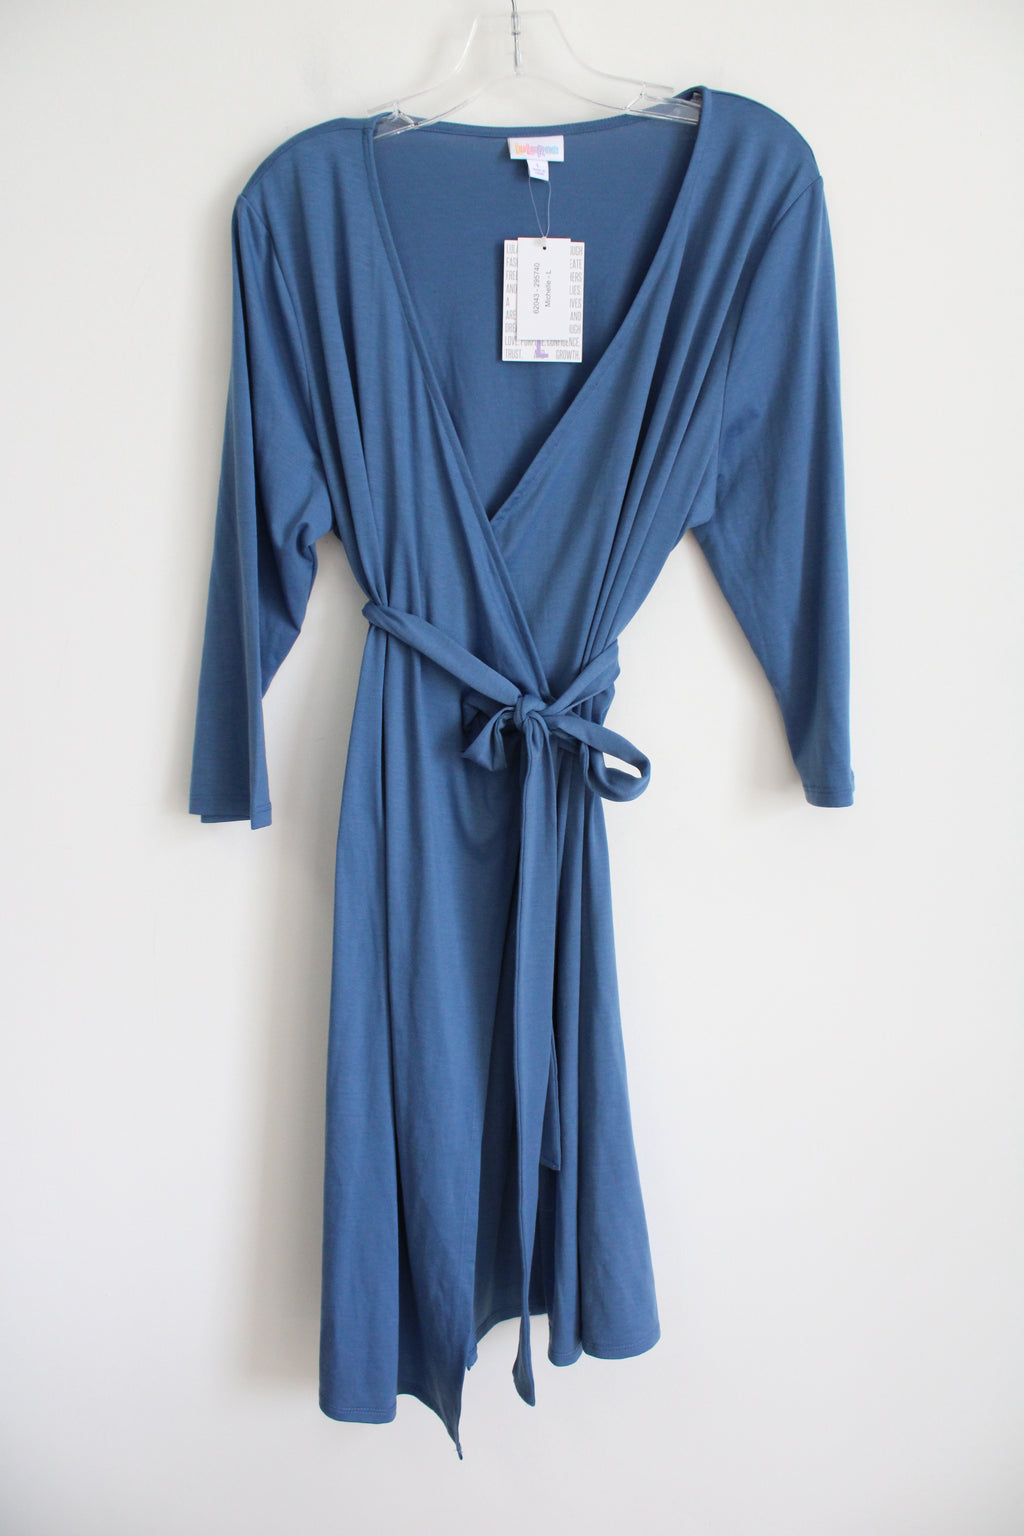 NEW LuLaRoe Blue Michelle Wrap Dress | L